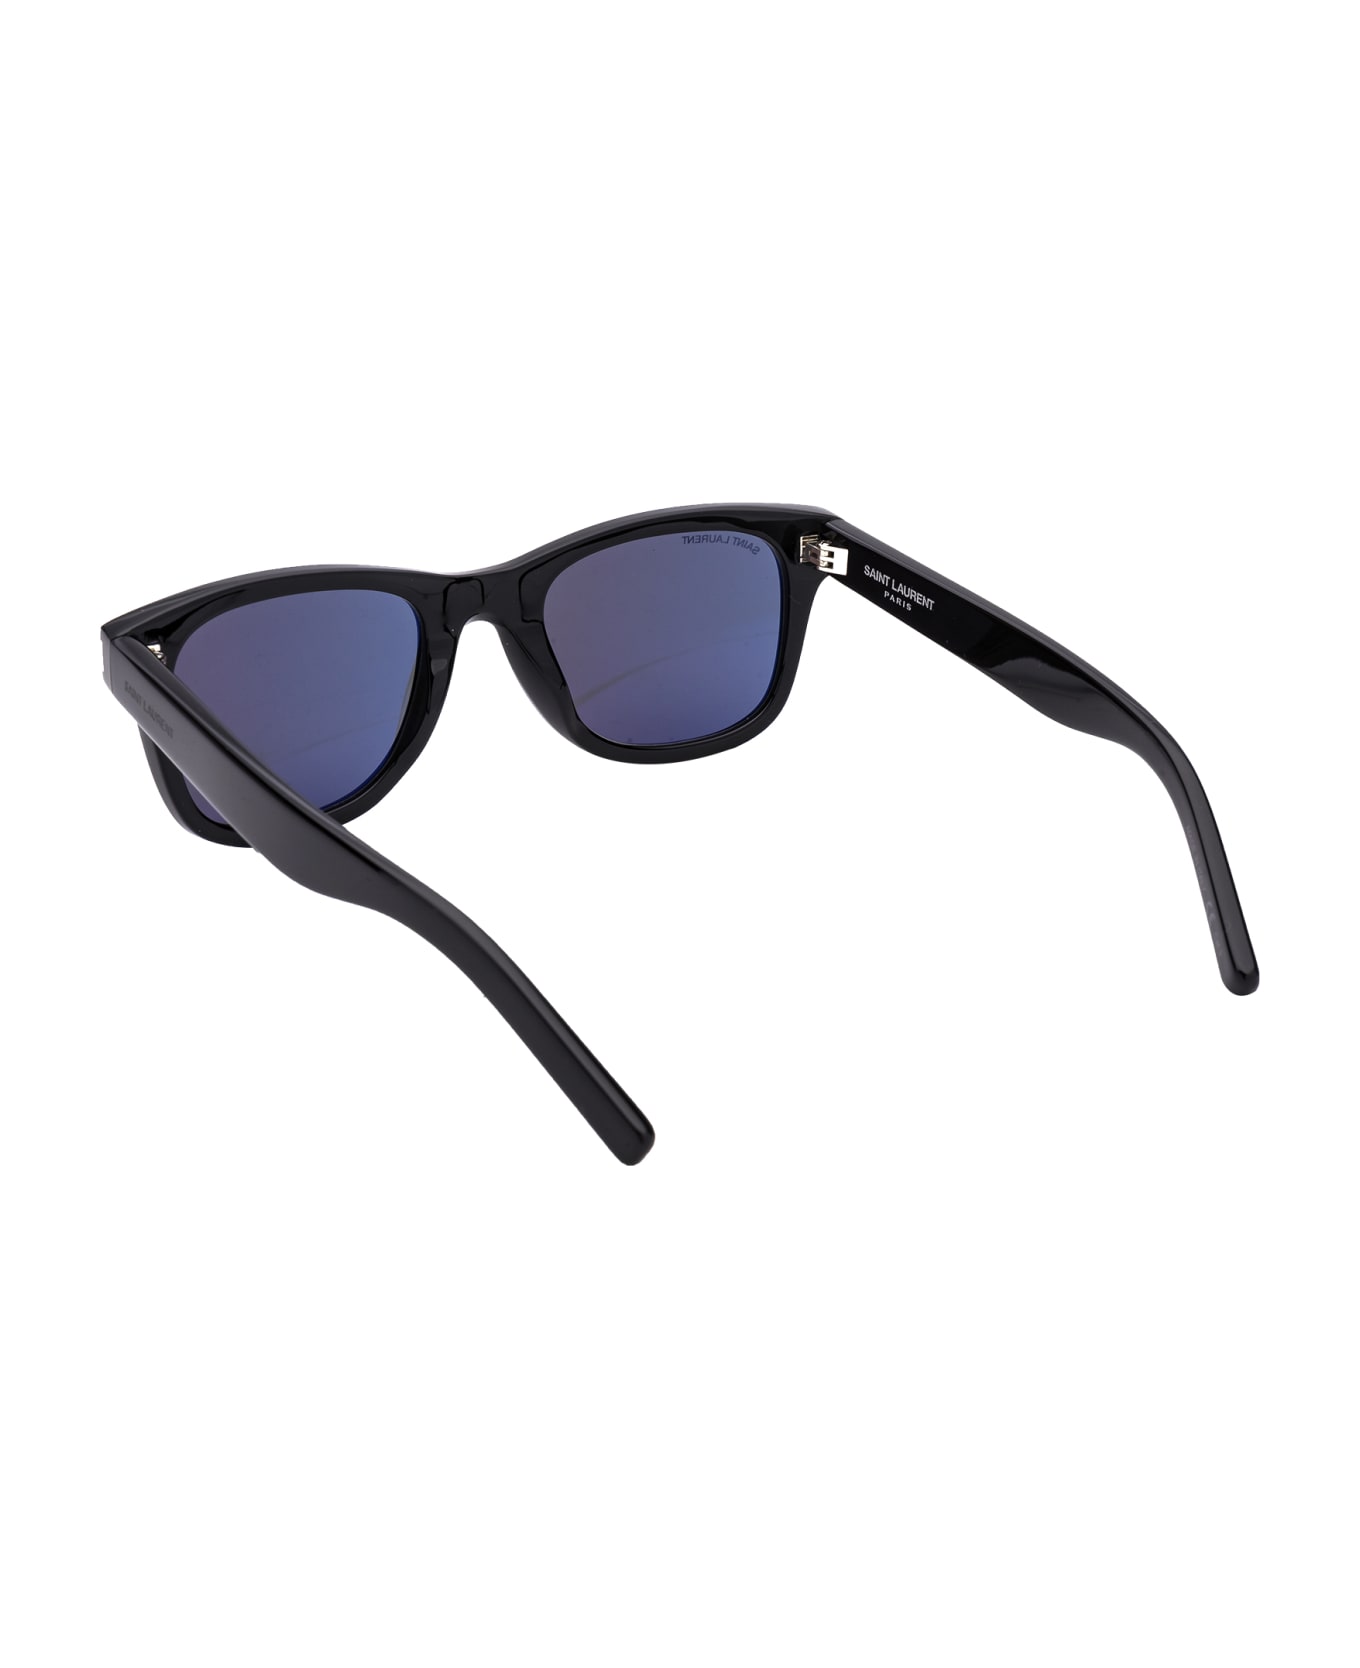 Saint Laurent Eyewear Sl 51 Sunglasses - 002 BLACK BLACK GREY サングラス